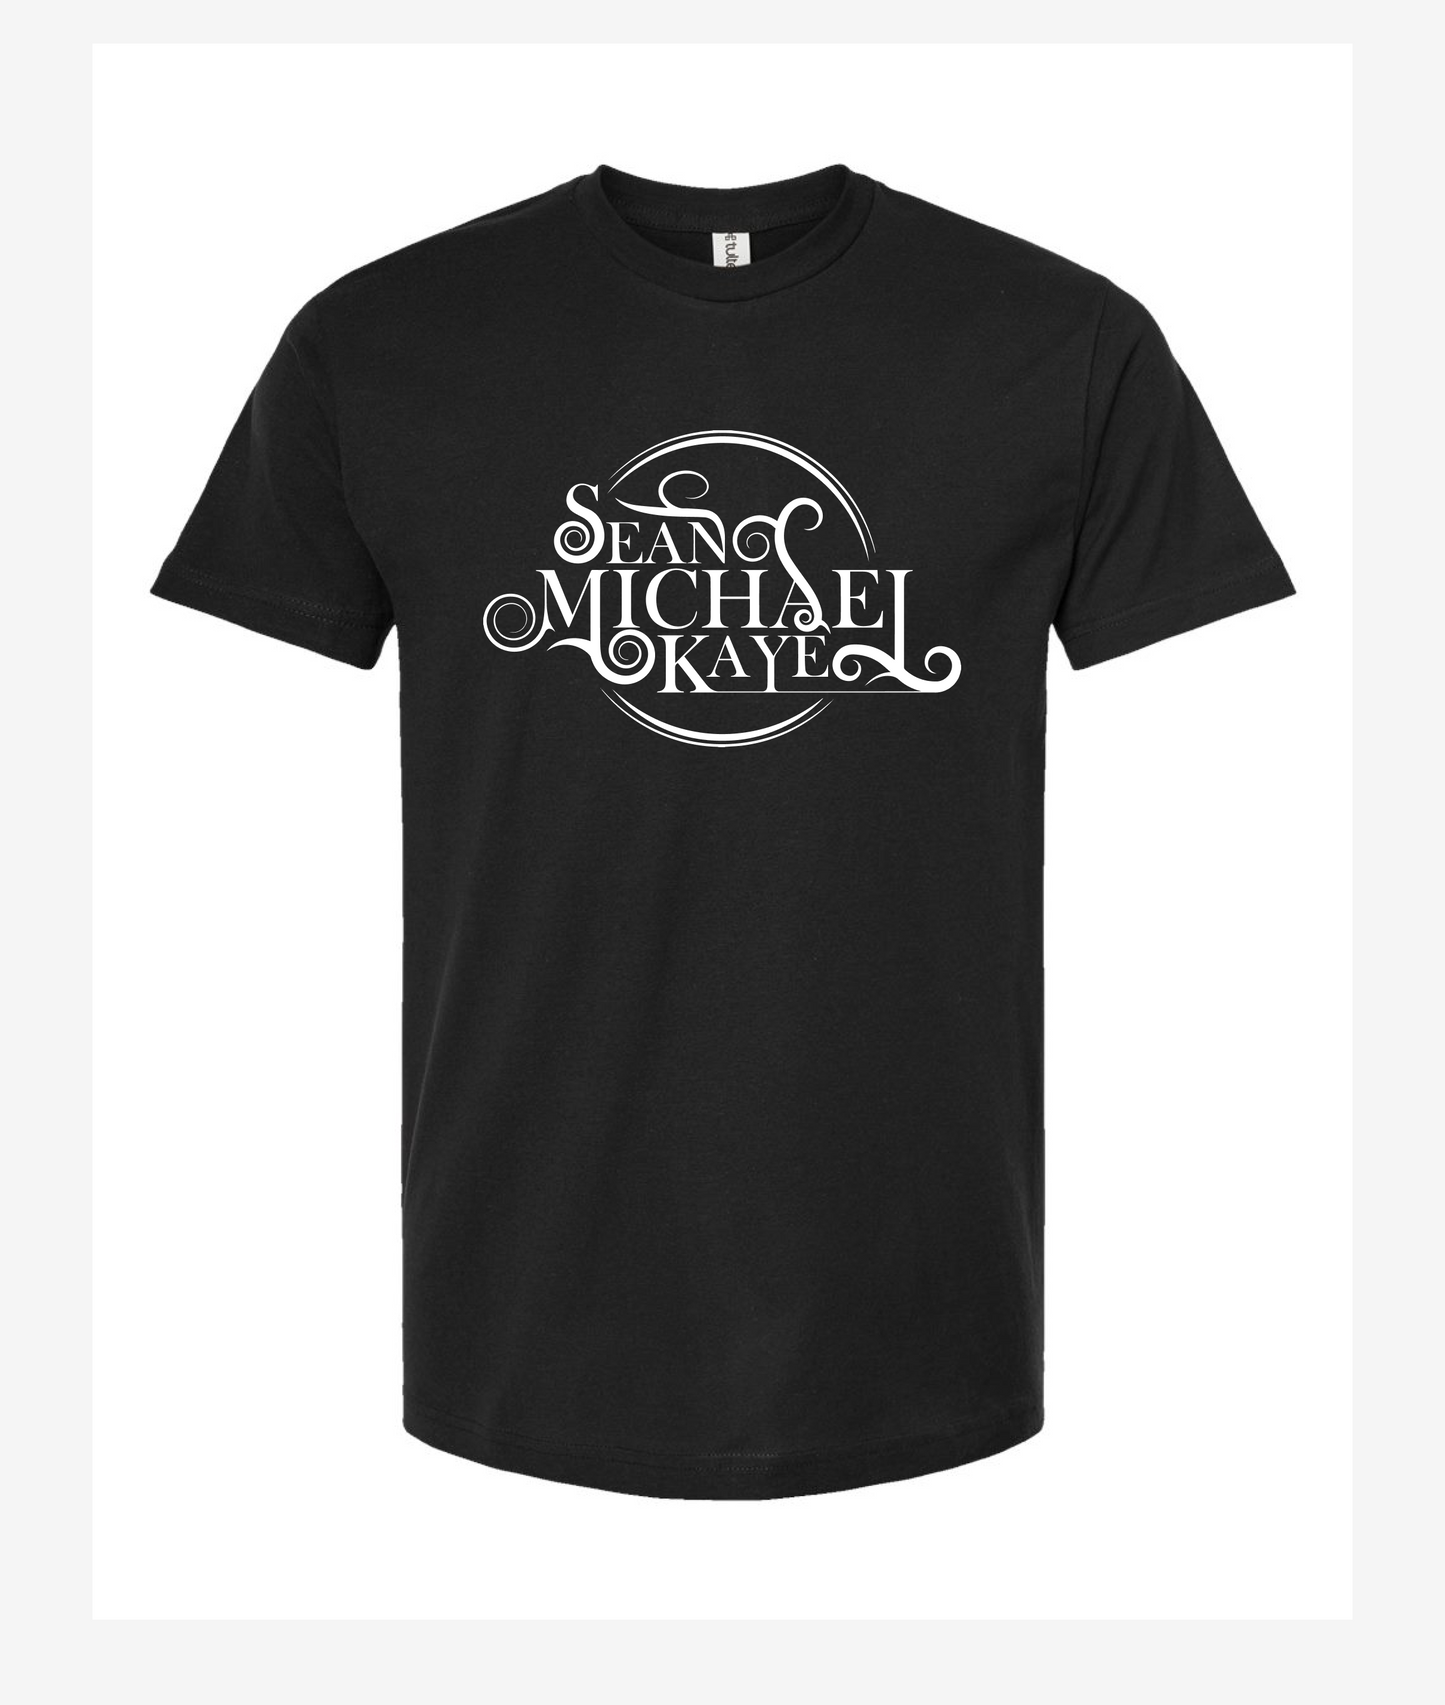 Sean Michael kaye Logo Black T-Shirt